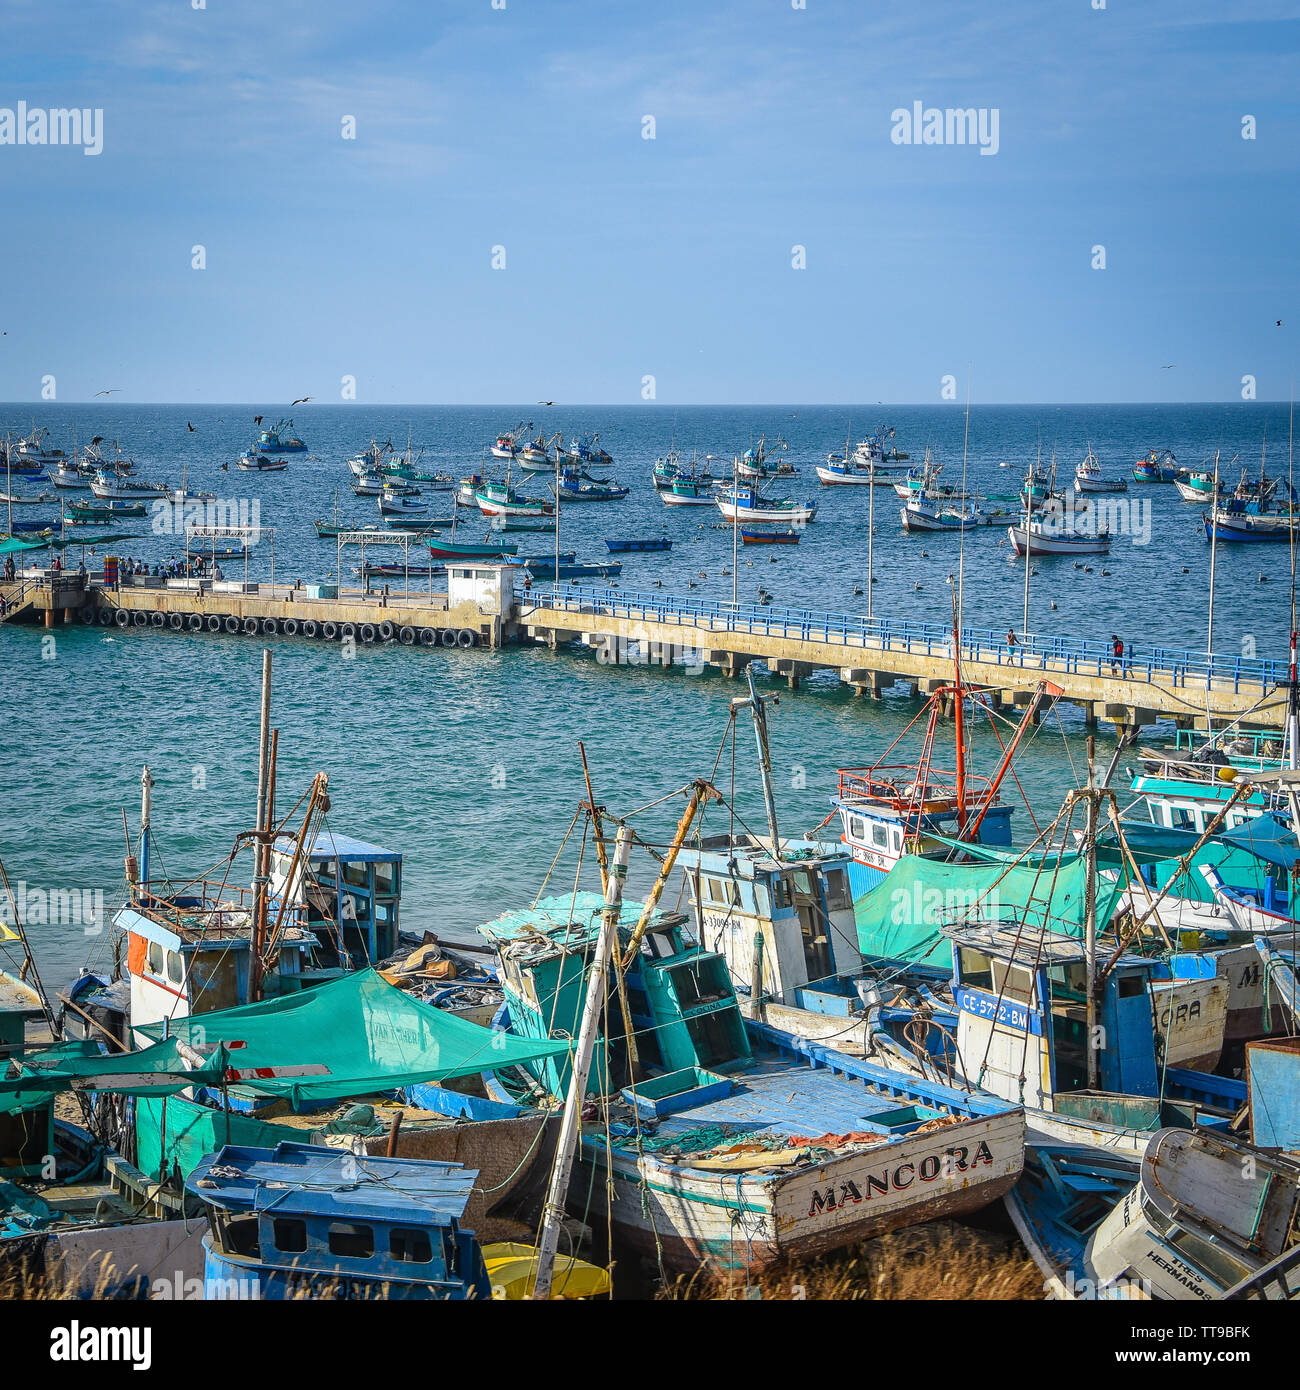 Mancora, Peru - April 18, 2019: Fishing boats in Mancora Marina Stock Photo